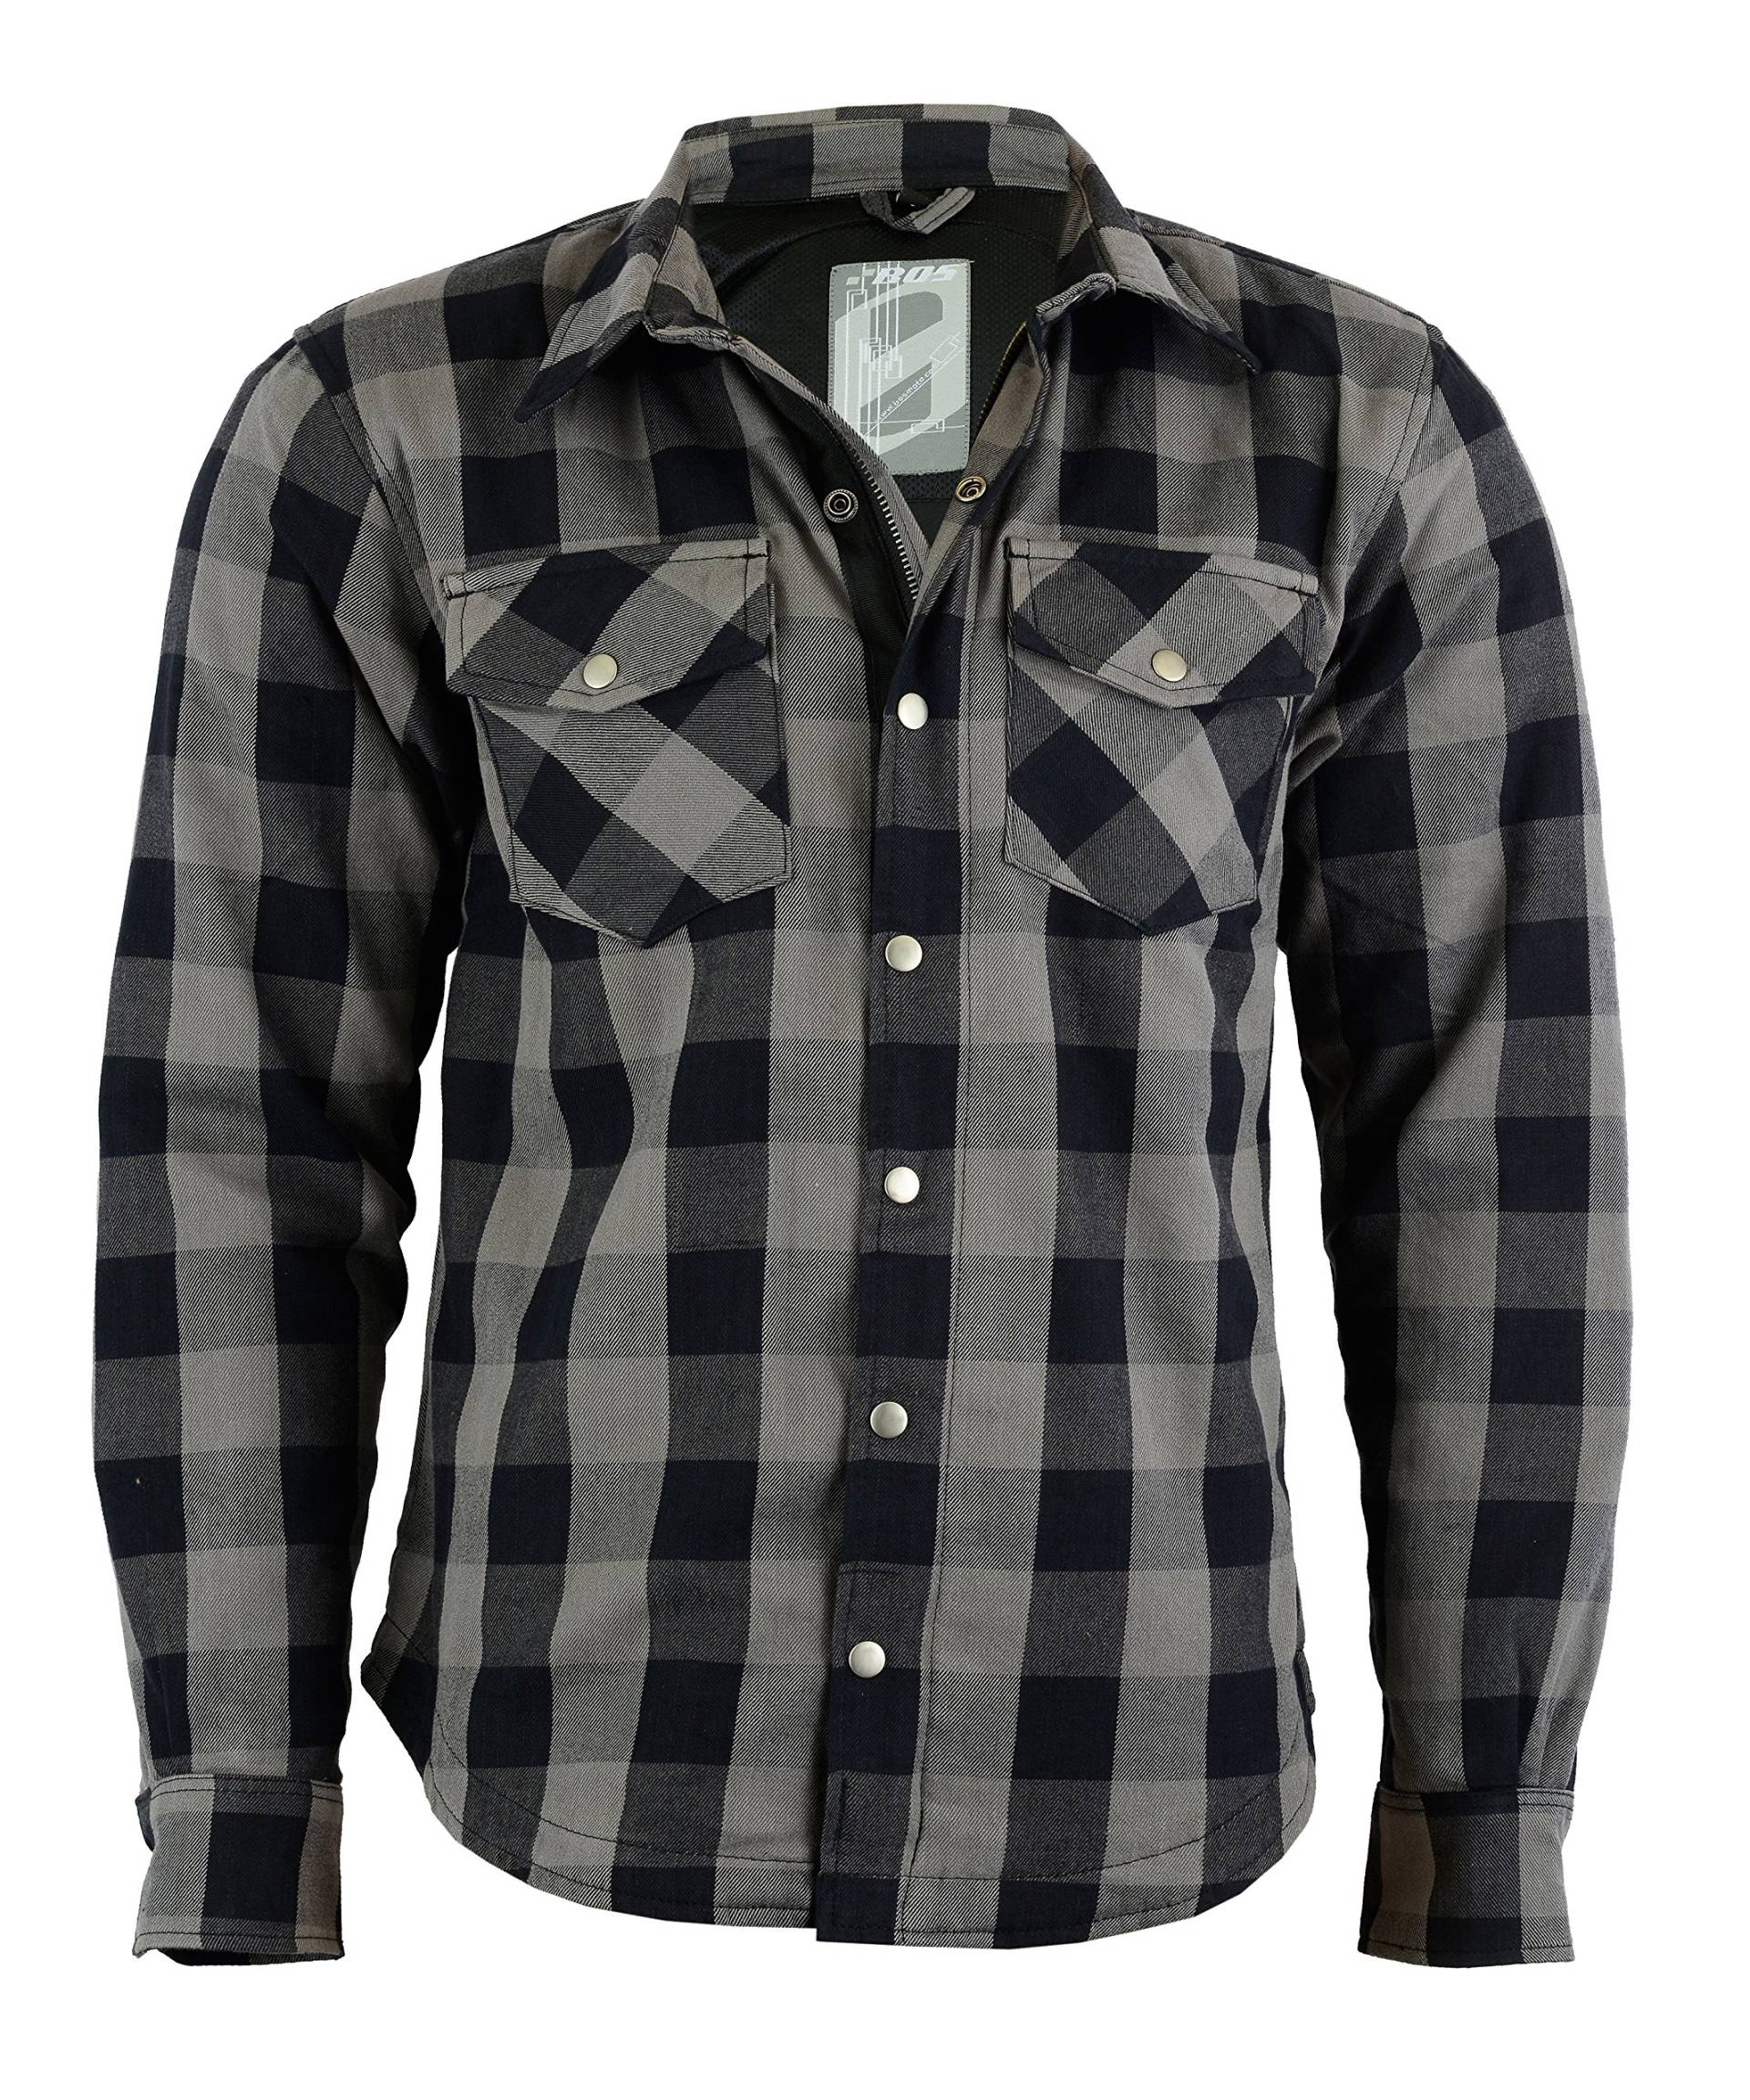 Kev-Hemd Jacke Lumberjack Lumber Jack Shirt (L, Grau Schwarz) von BOSmoto